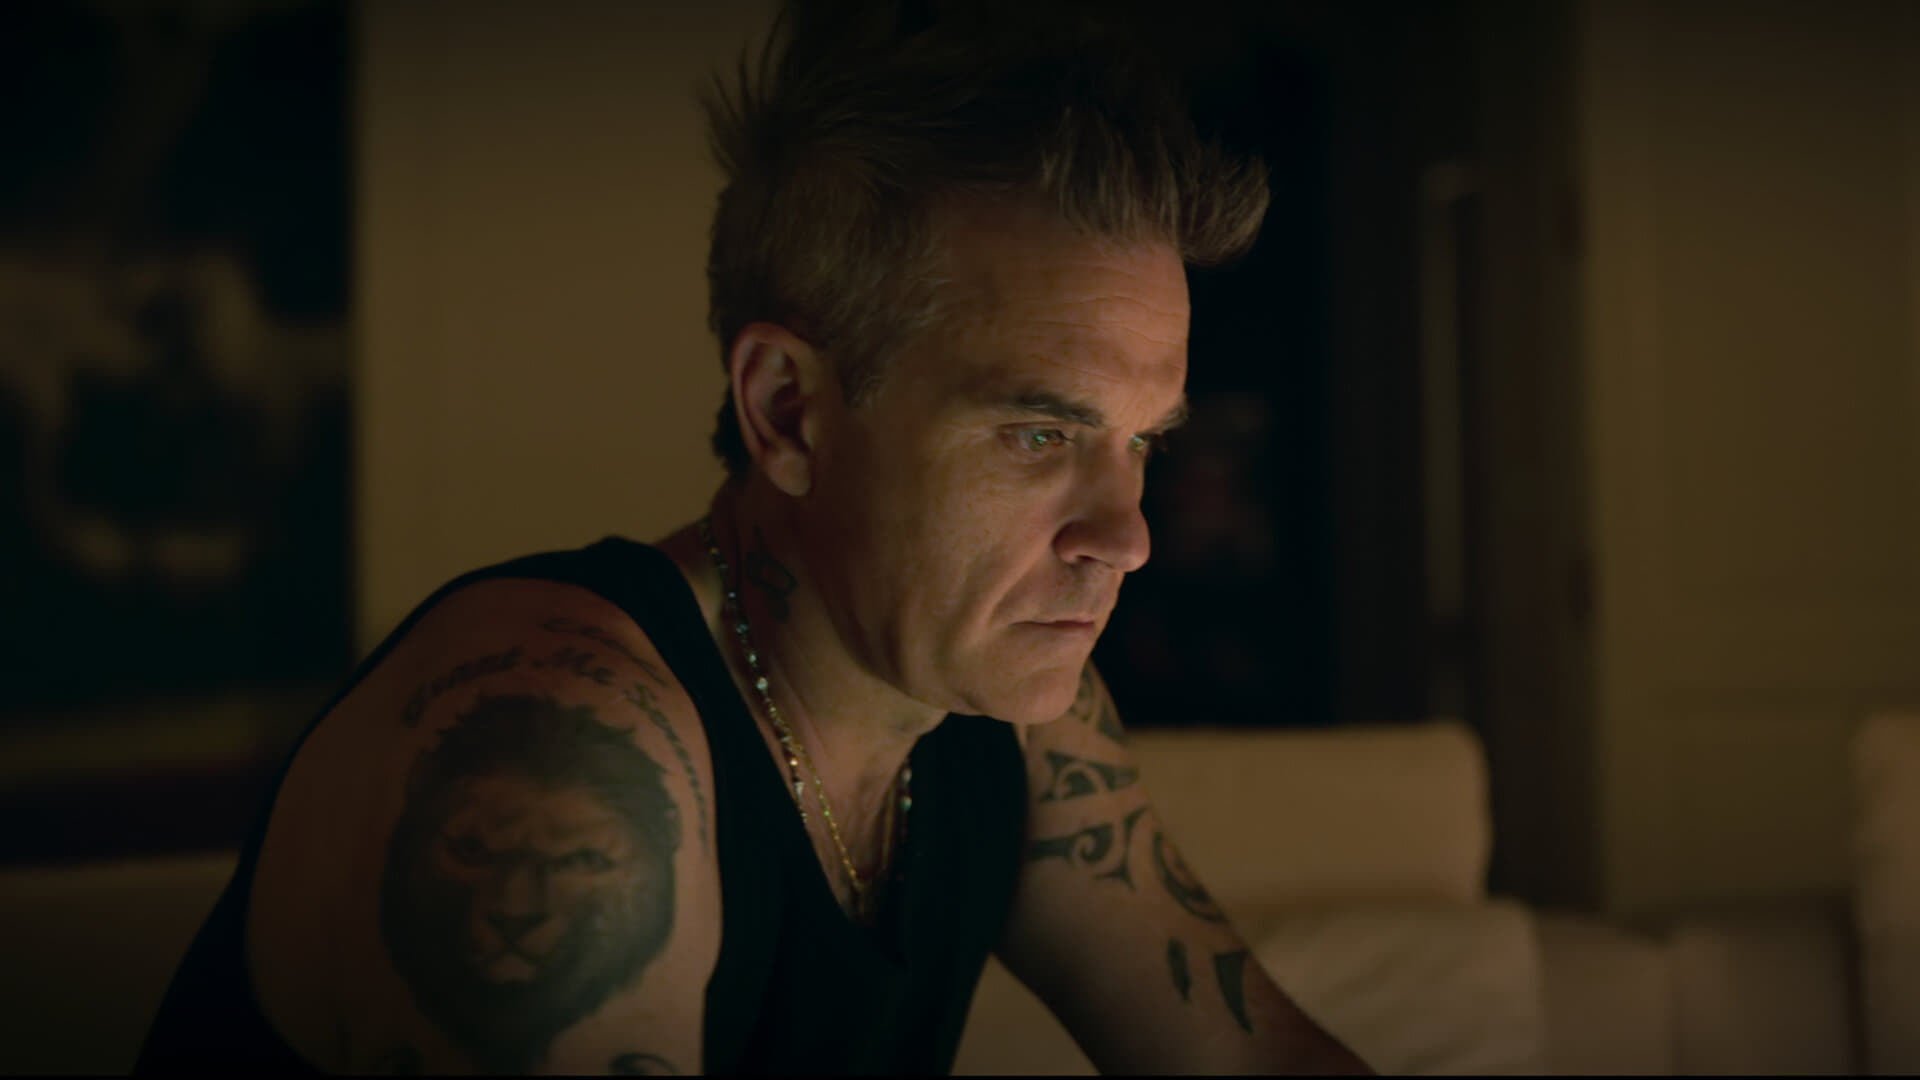 Image Robbie Williams 1